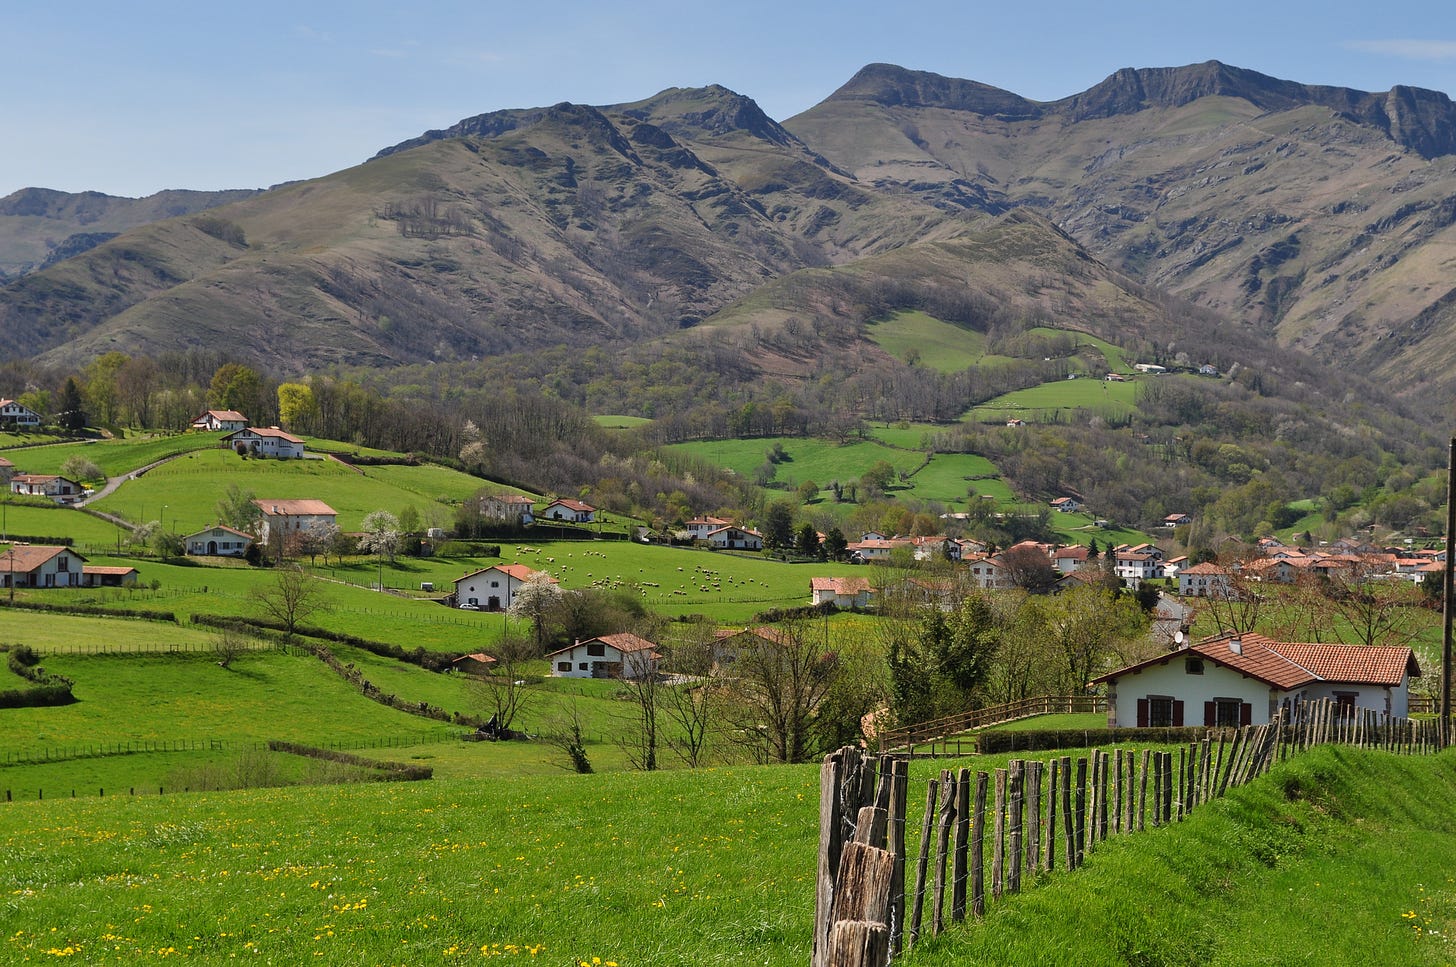 The Basque countryside near Saint-Etienne de Baïgorry, Basse-Navarre, France